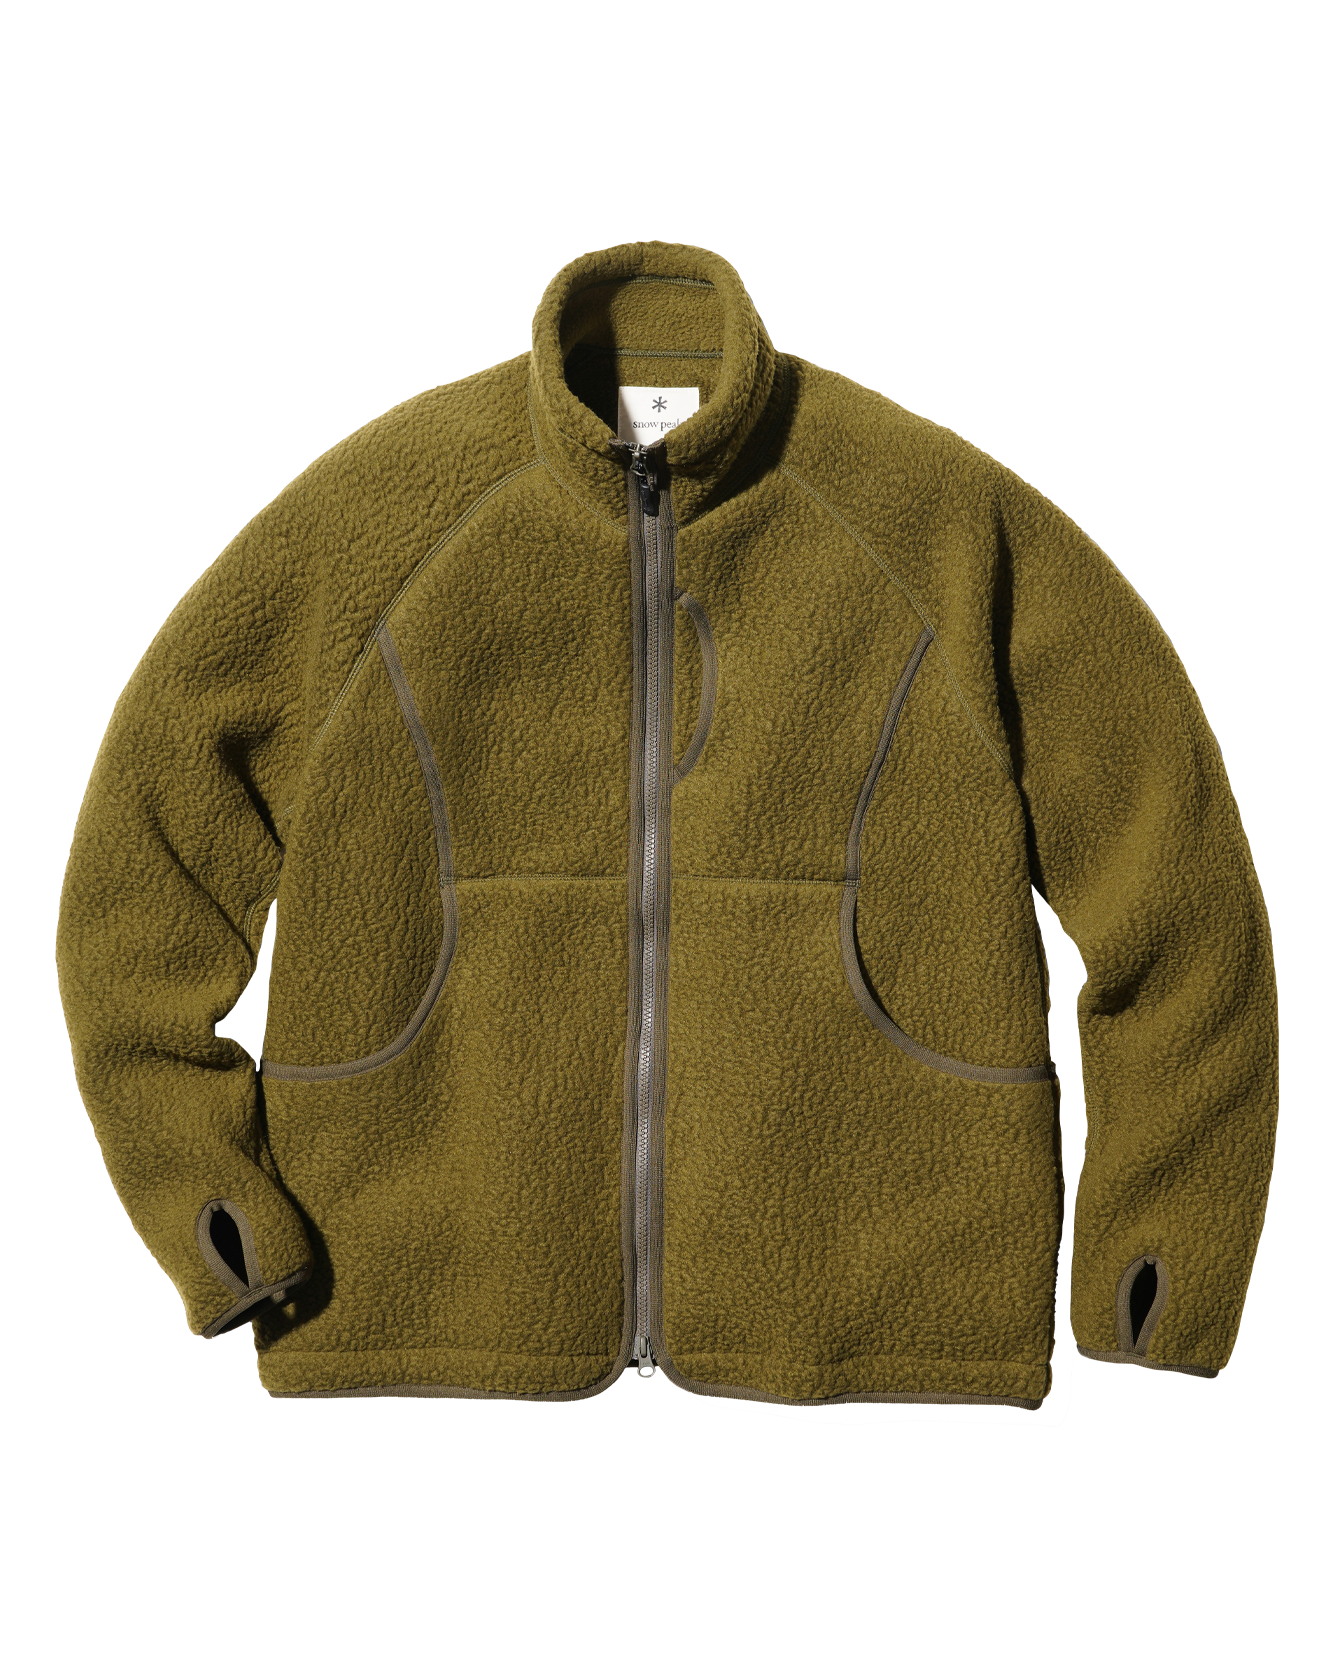 Snow Peak Micro Fleece Jacket, SW-23AU011-GR